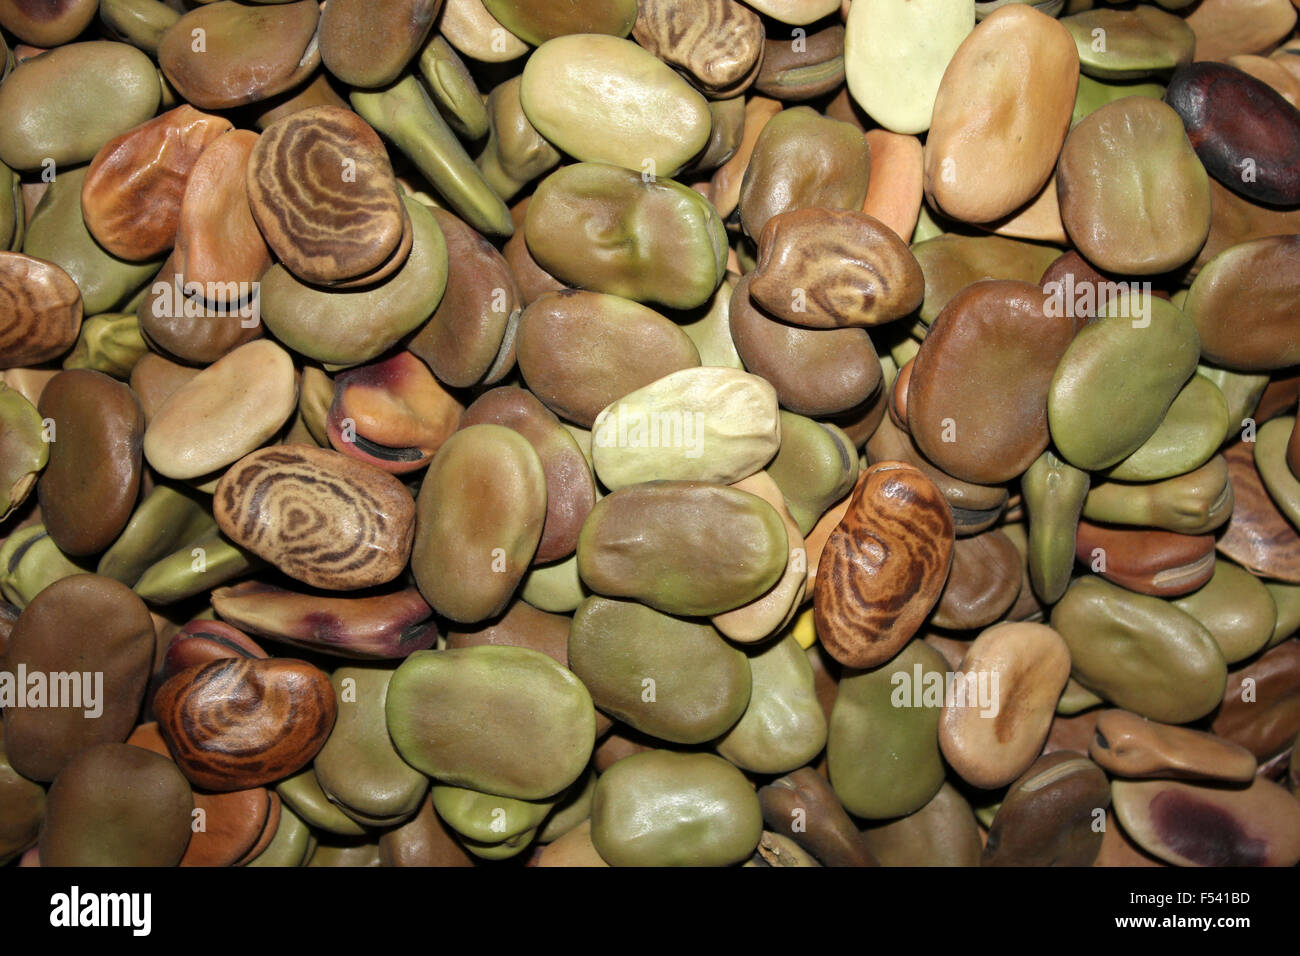 Dried Habas In Peru - the Fava Bean Vicia faba Stock Photo